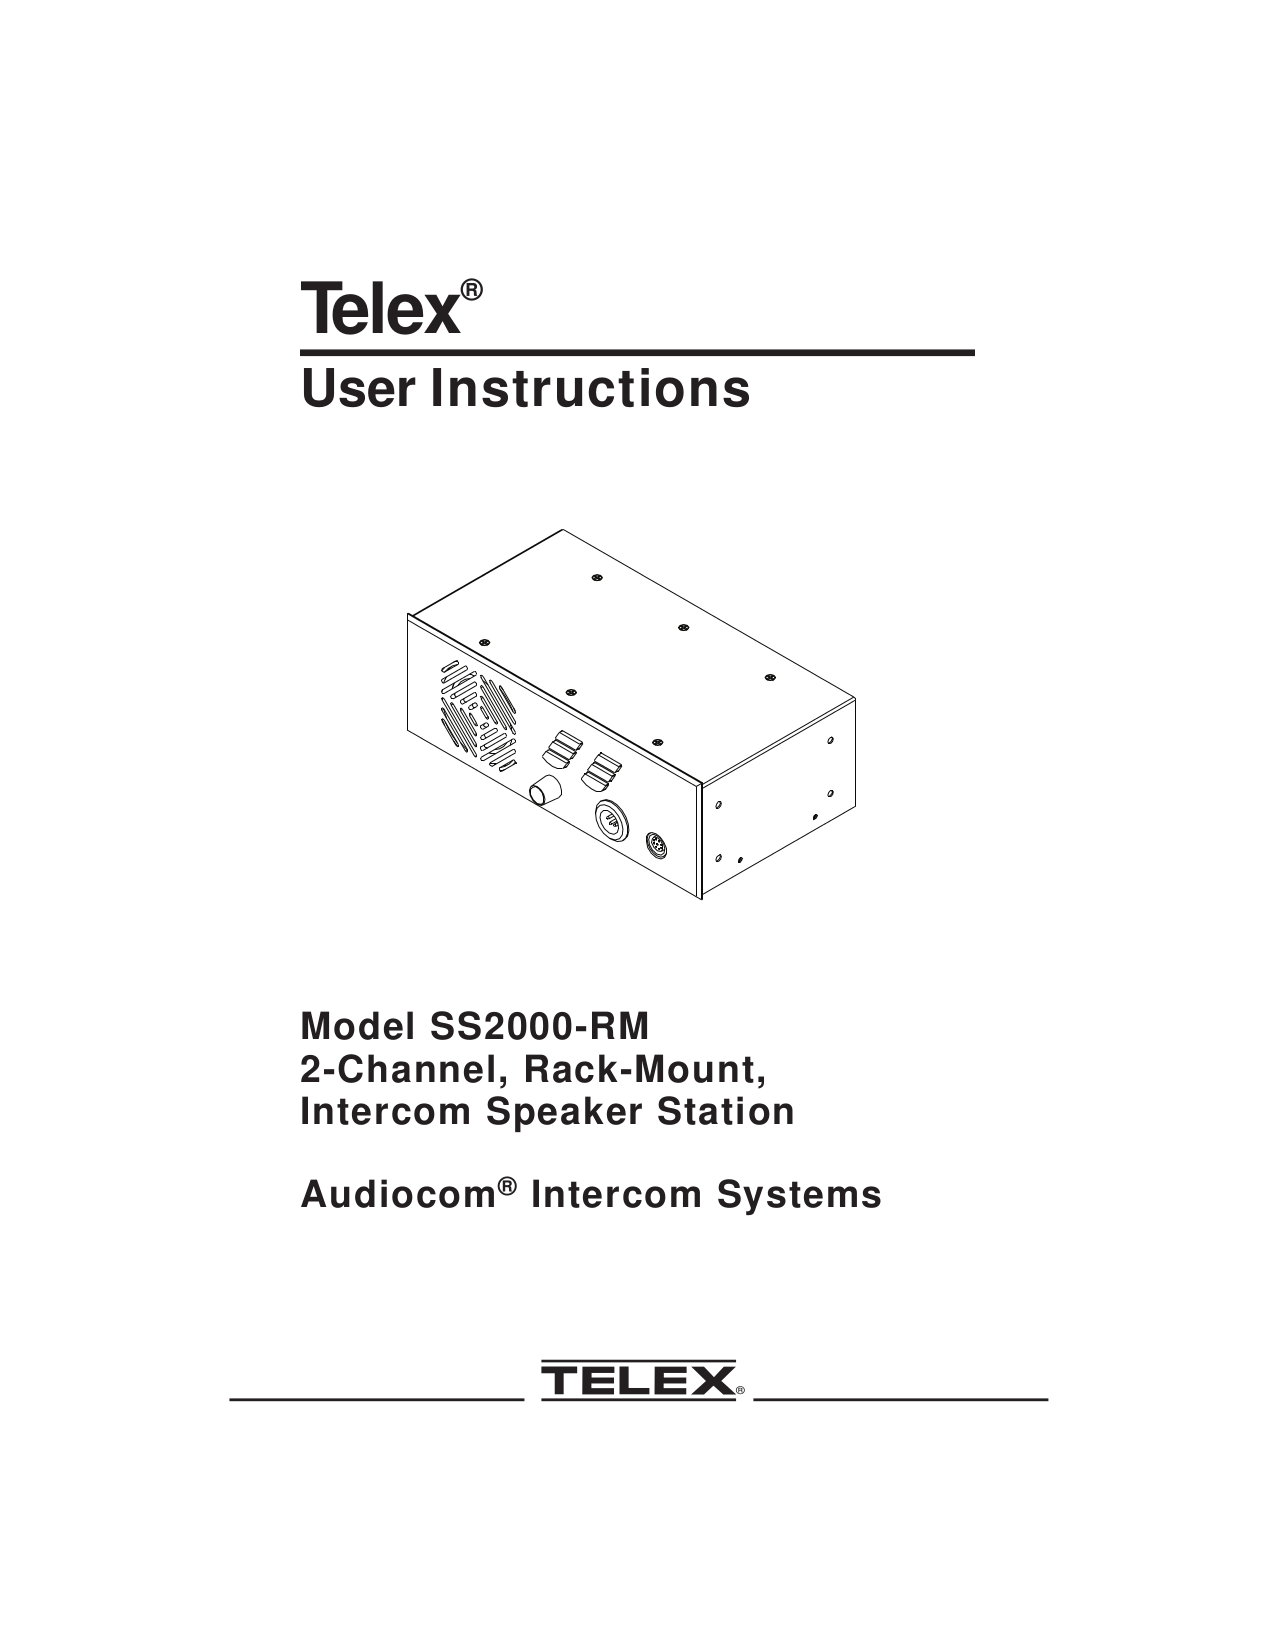 pdf for Telex Other SS2000 intercom system manual